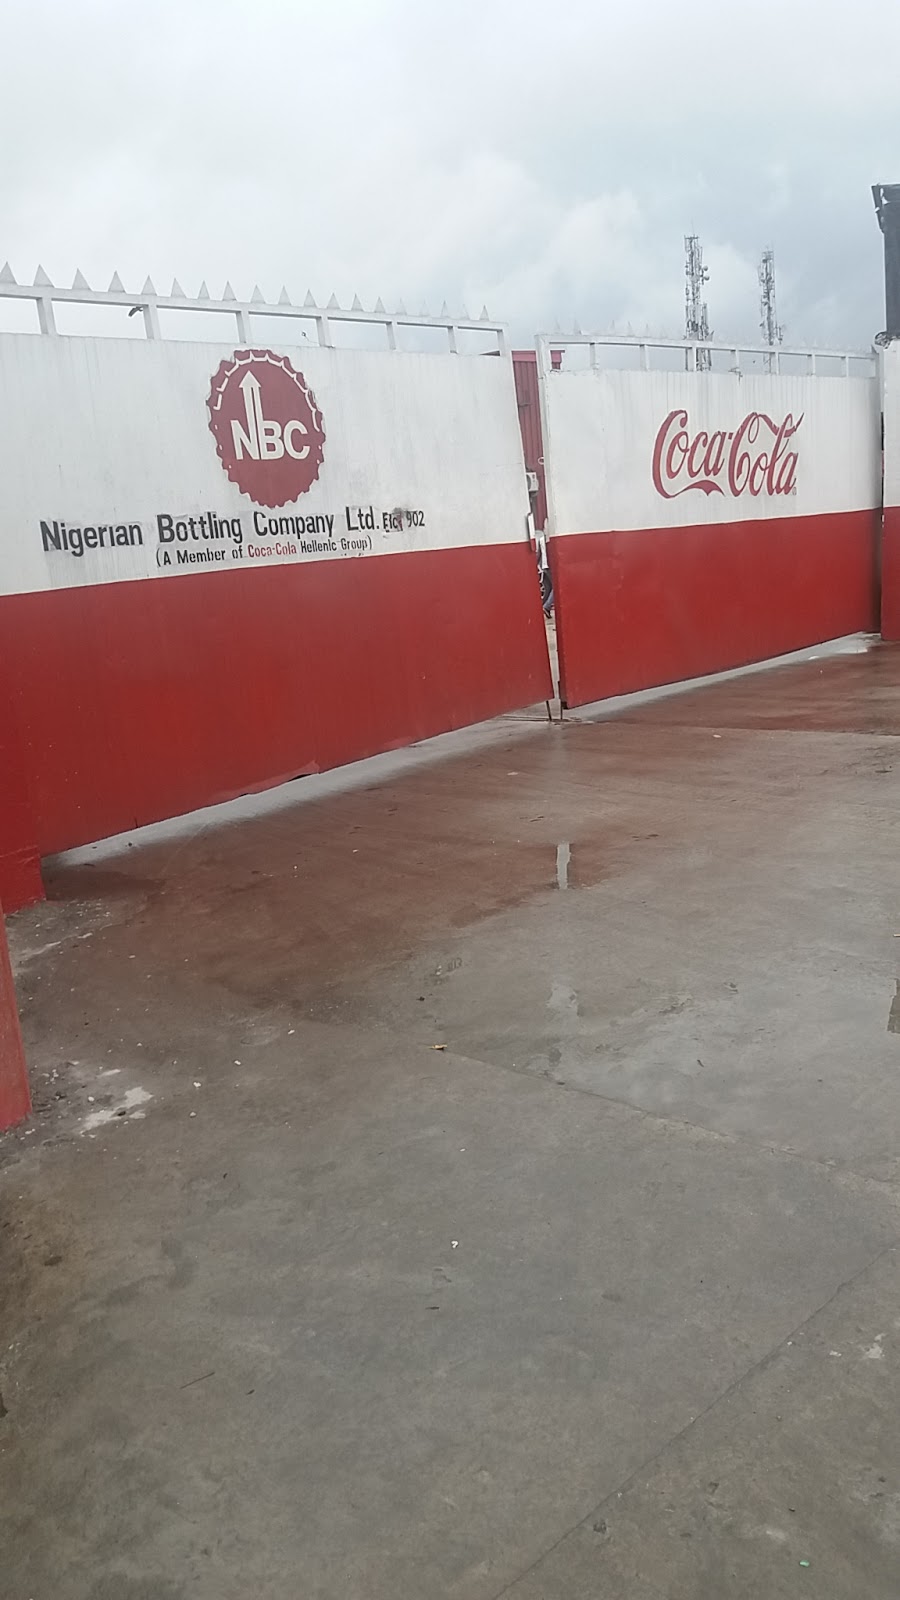 Nigerian Bottling Company Ltd.